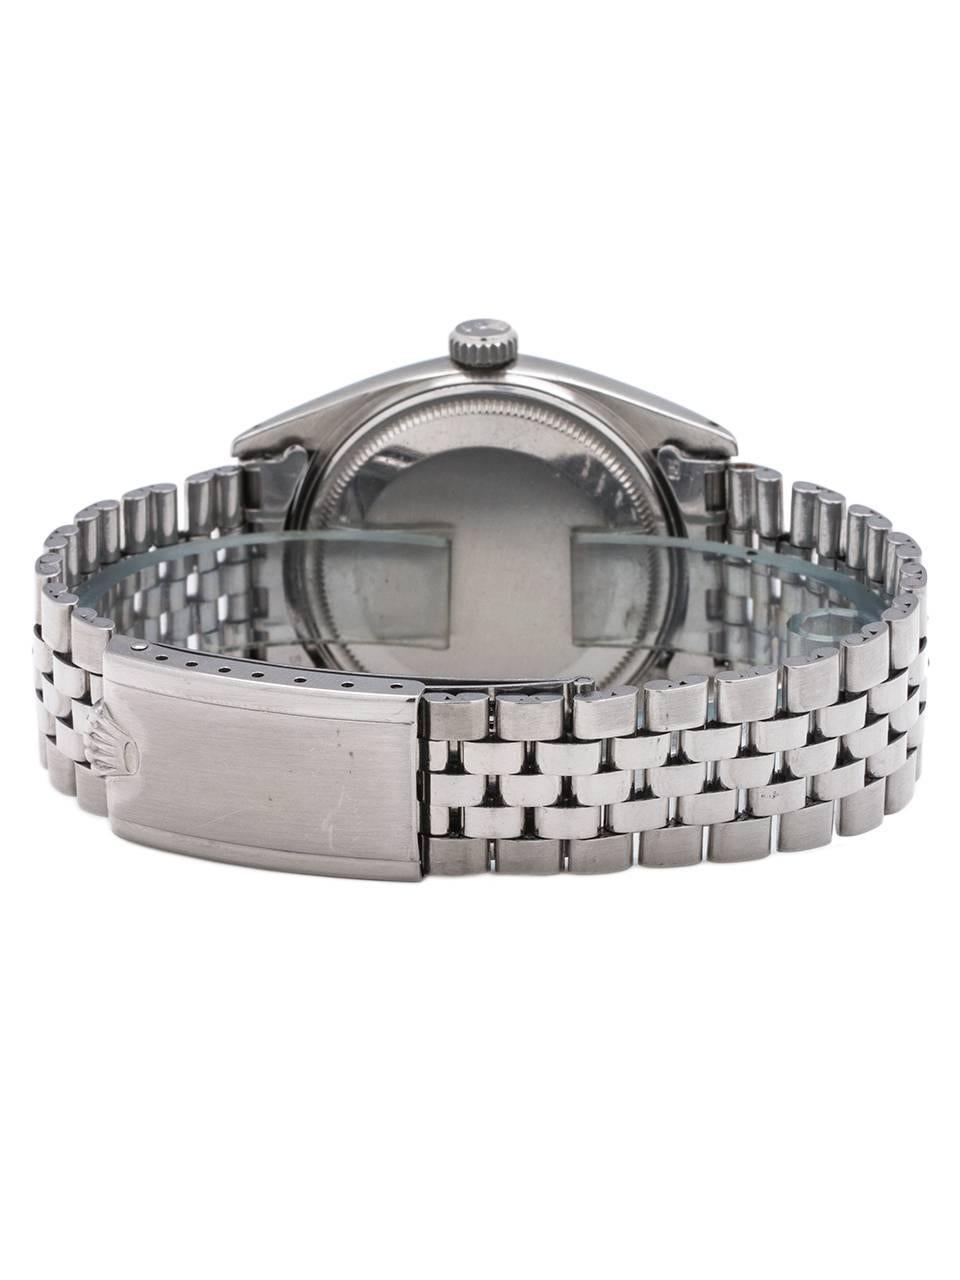 Men's Rolex Stainless Steel Datejust Self Winding Wristwatch ref 1601, circa 1963 For Sale